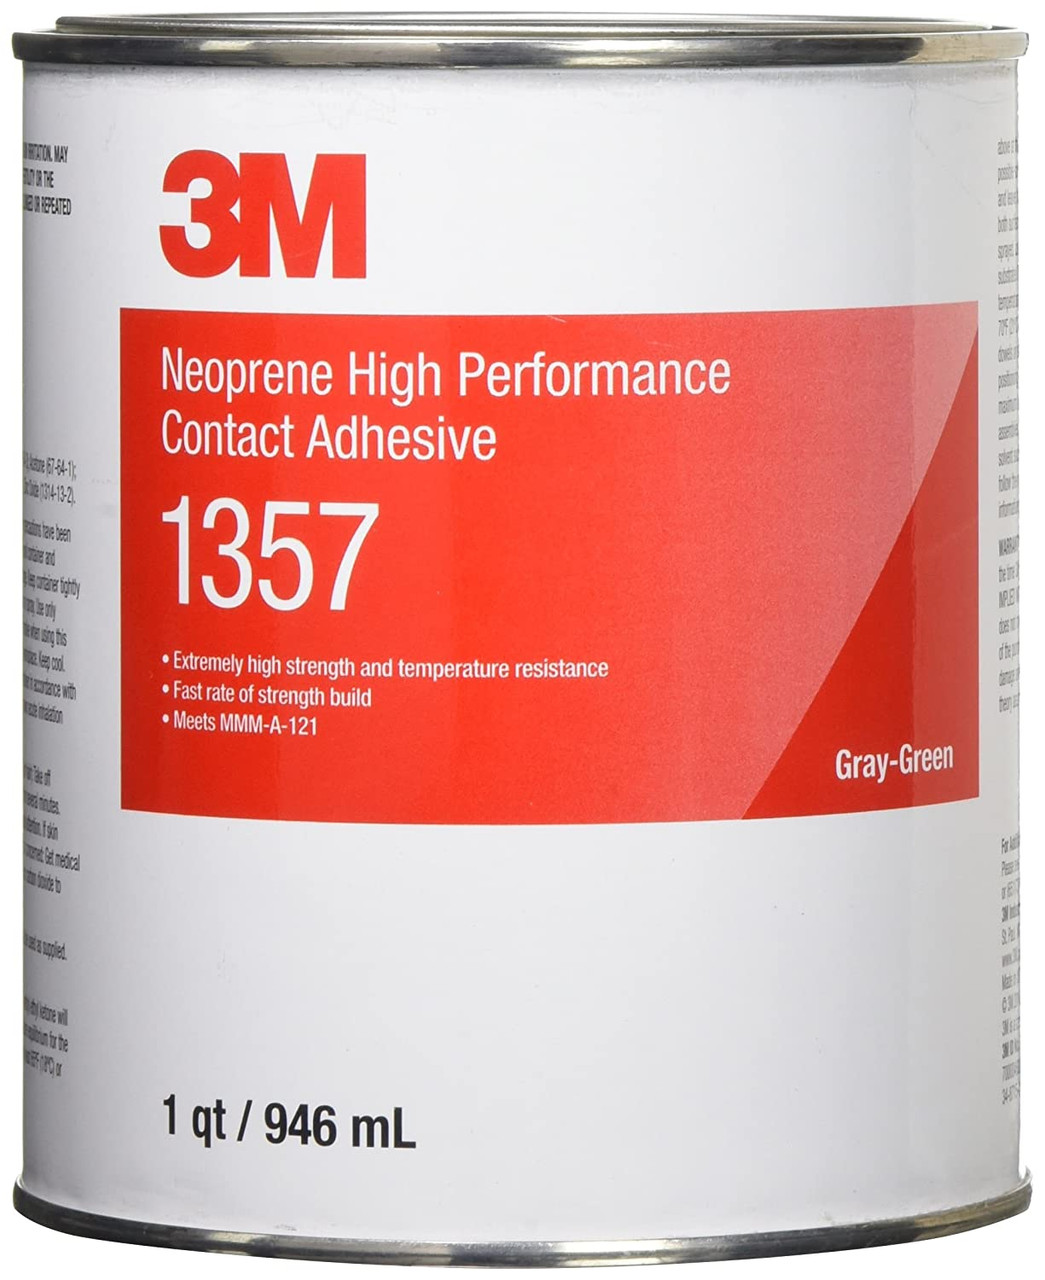 3M 3M-1357 Neoprene High Performance Contact Adhesive 1357 Gray-Green, 1  Quart